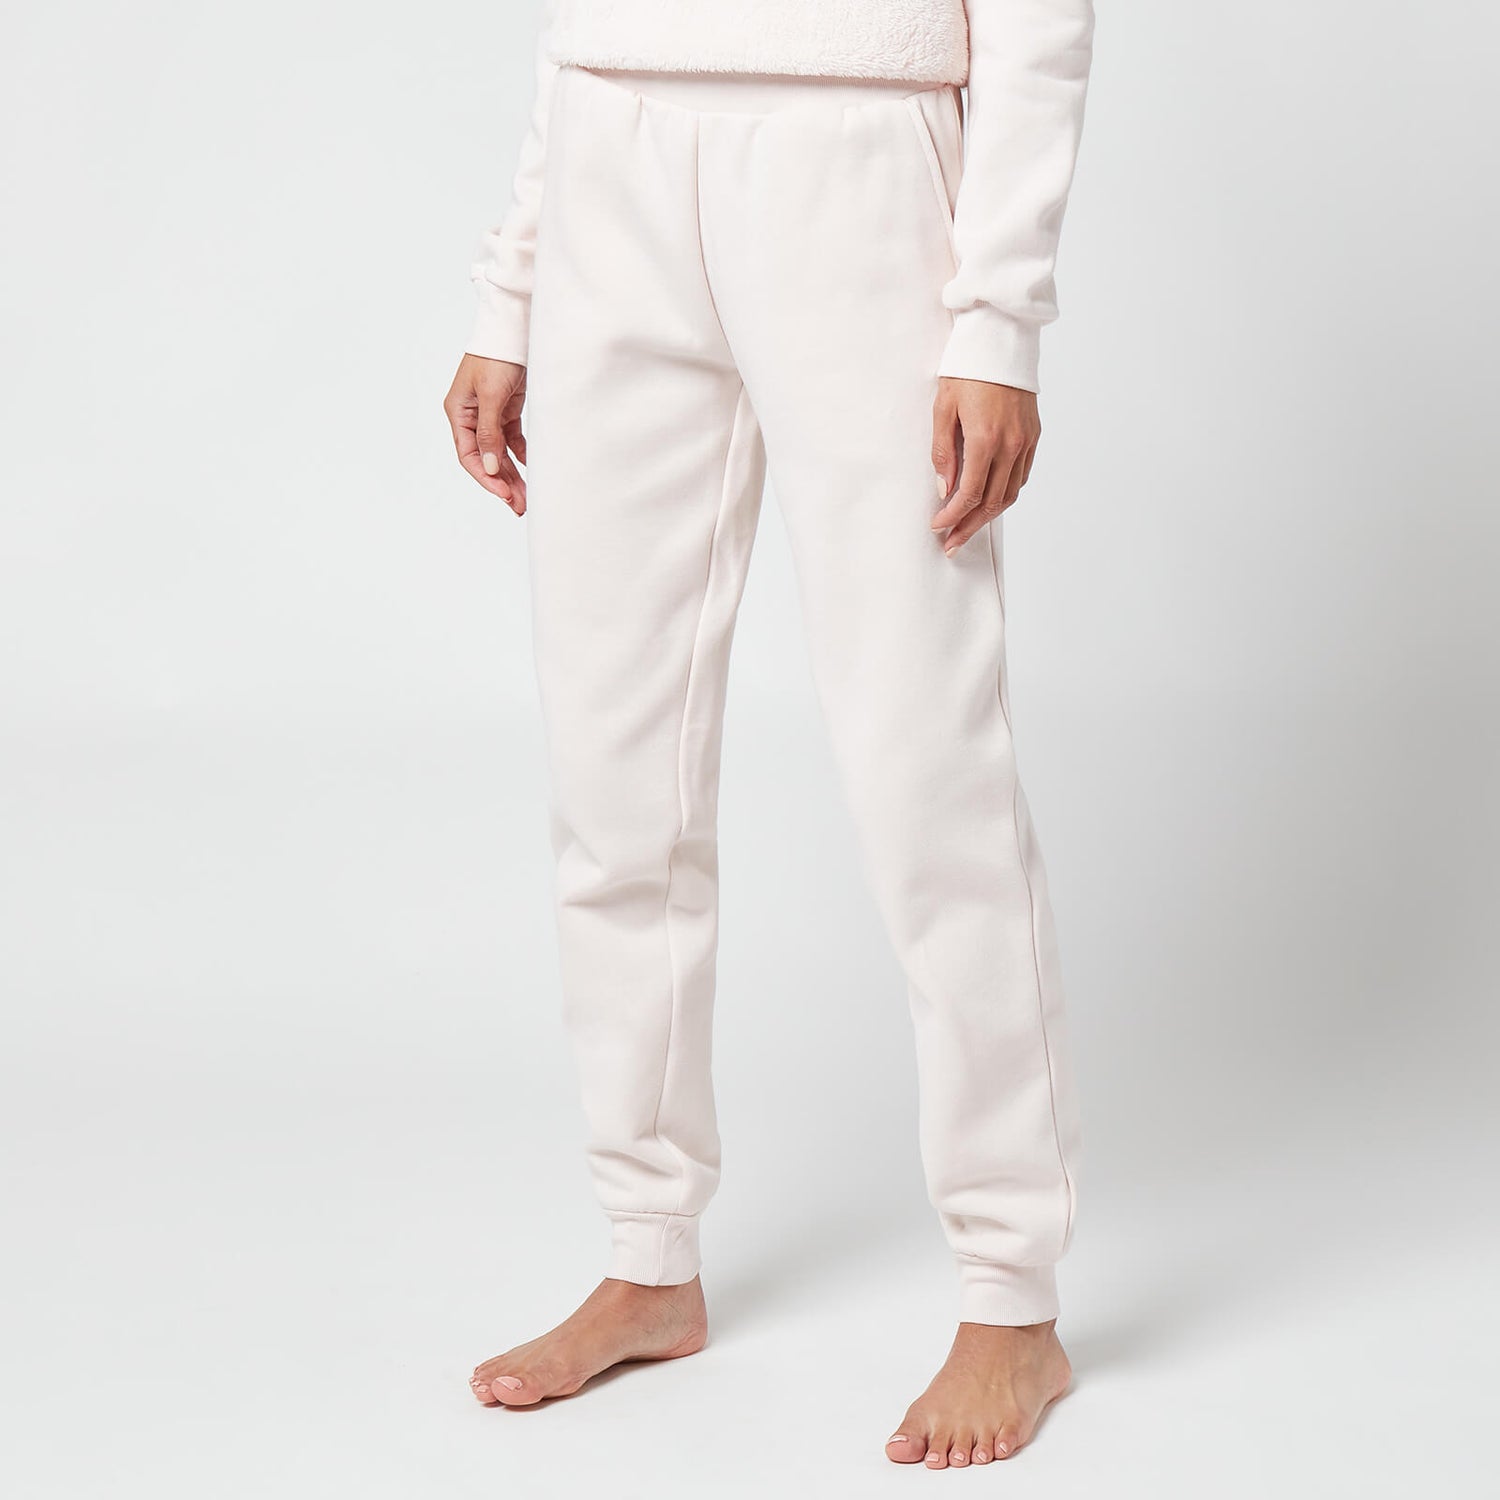 Emporio Armani Loungewear Women's Fuzzy Fleece Pants with Cuffs - Powder Pink